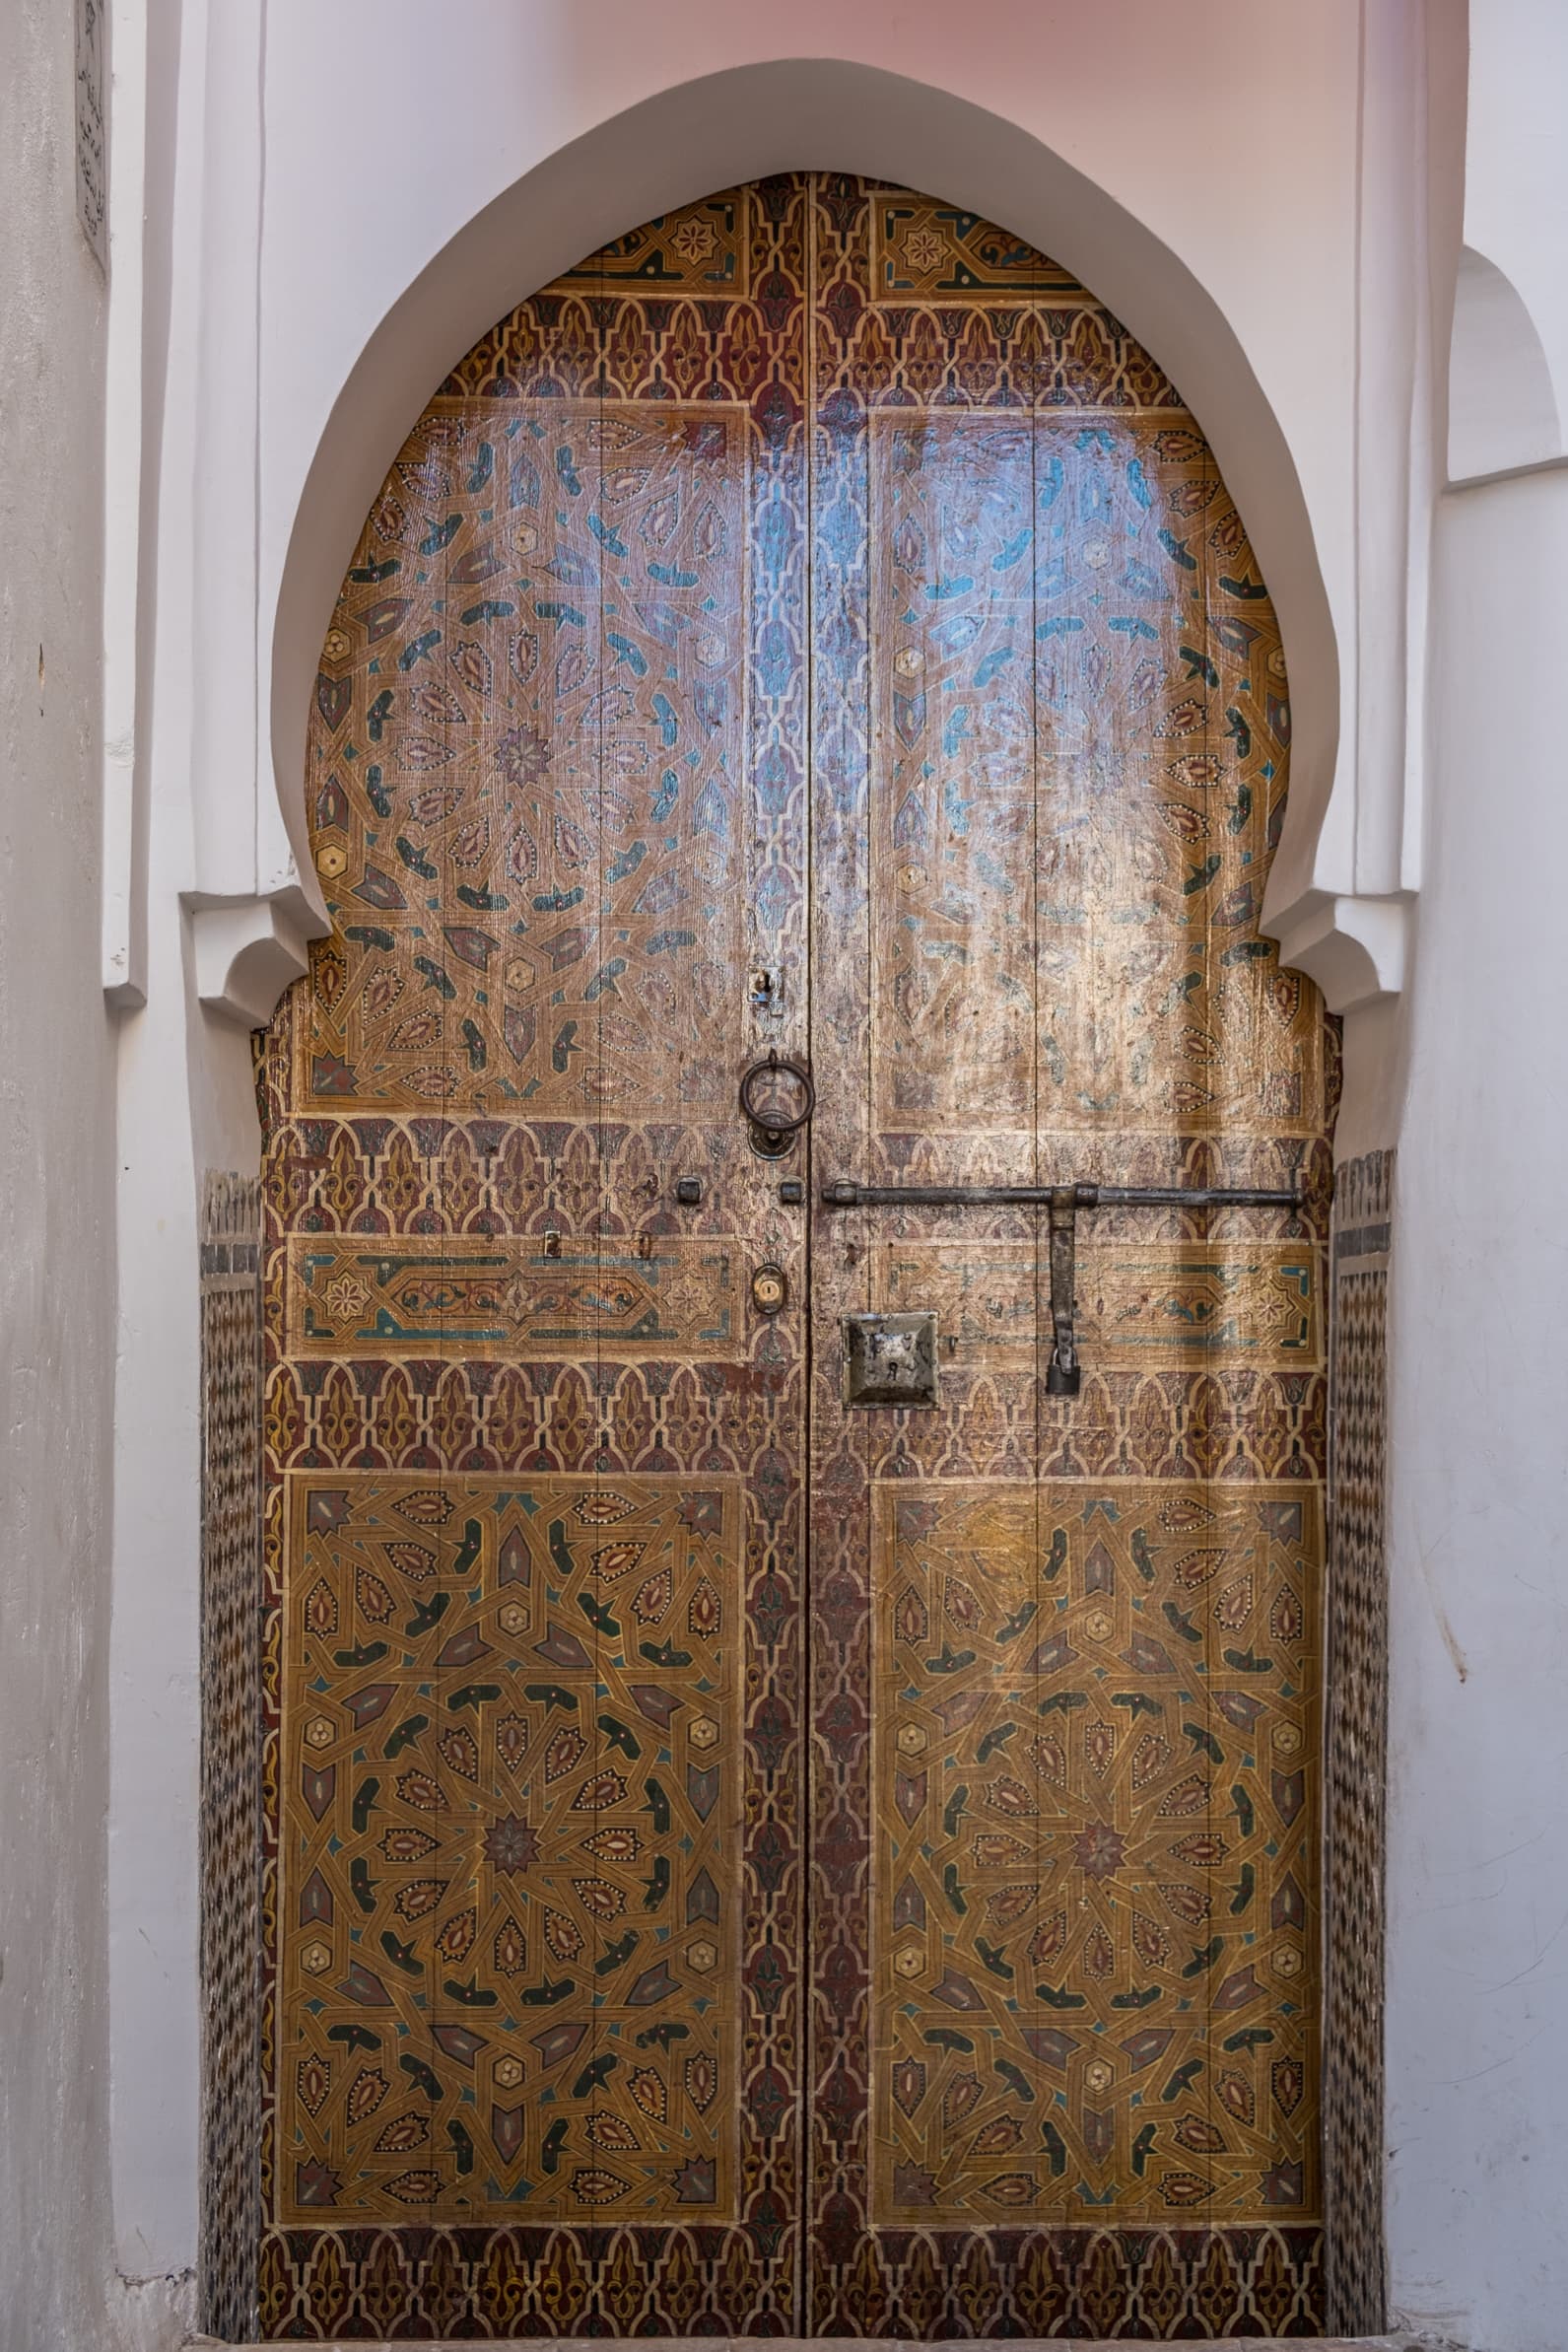 An ornate wooden door in Fez, Morocco